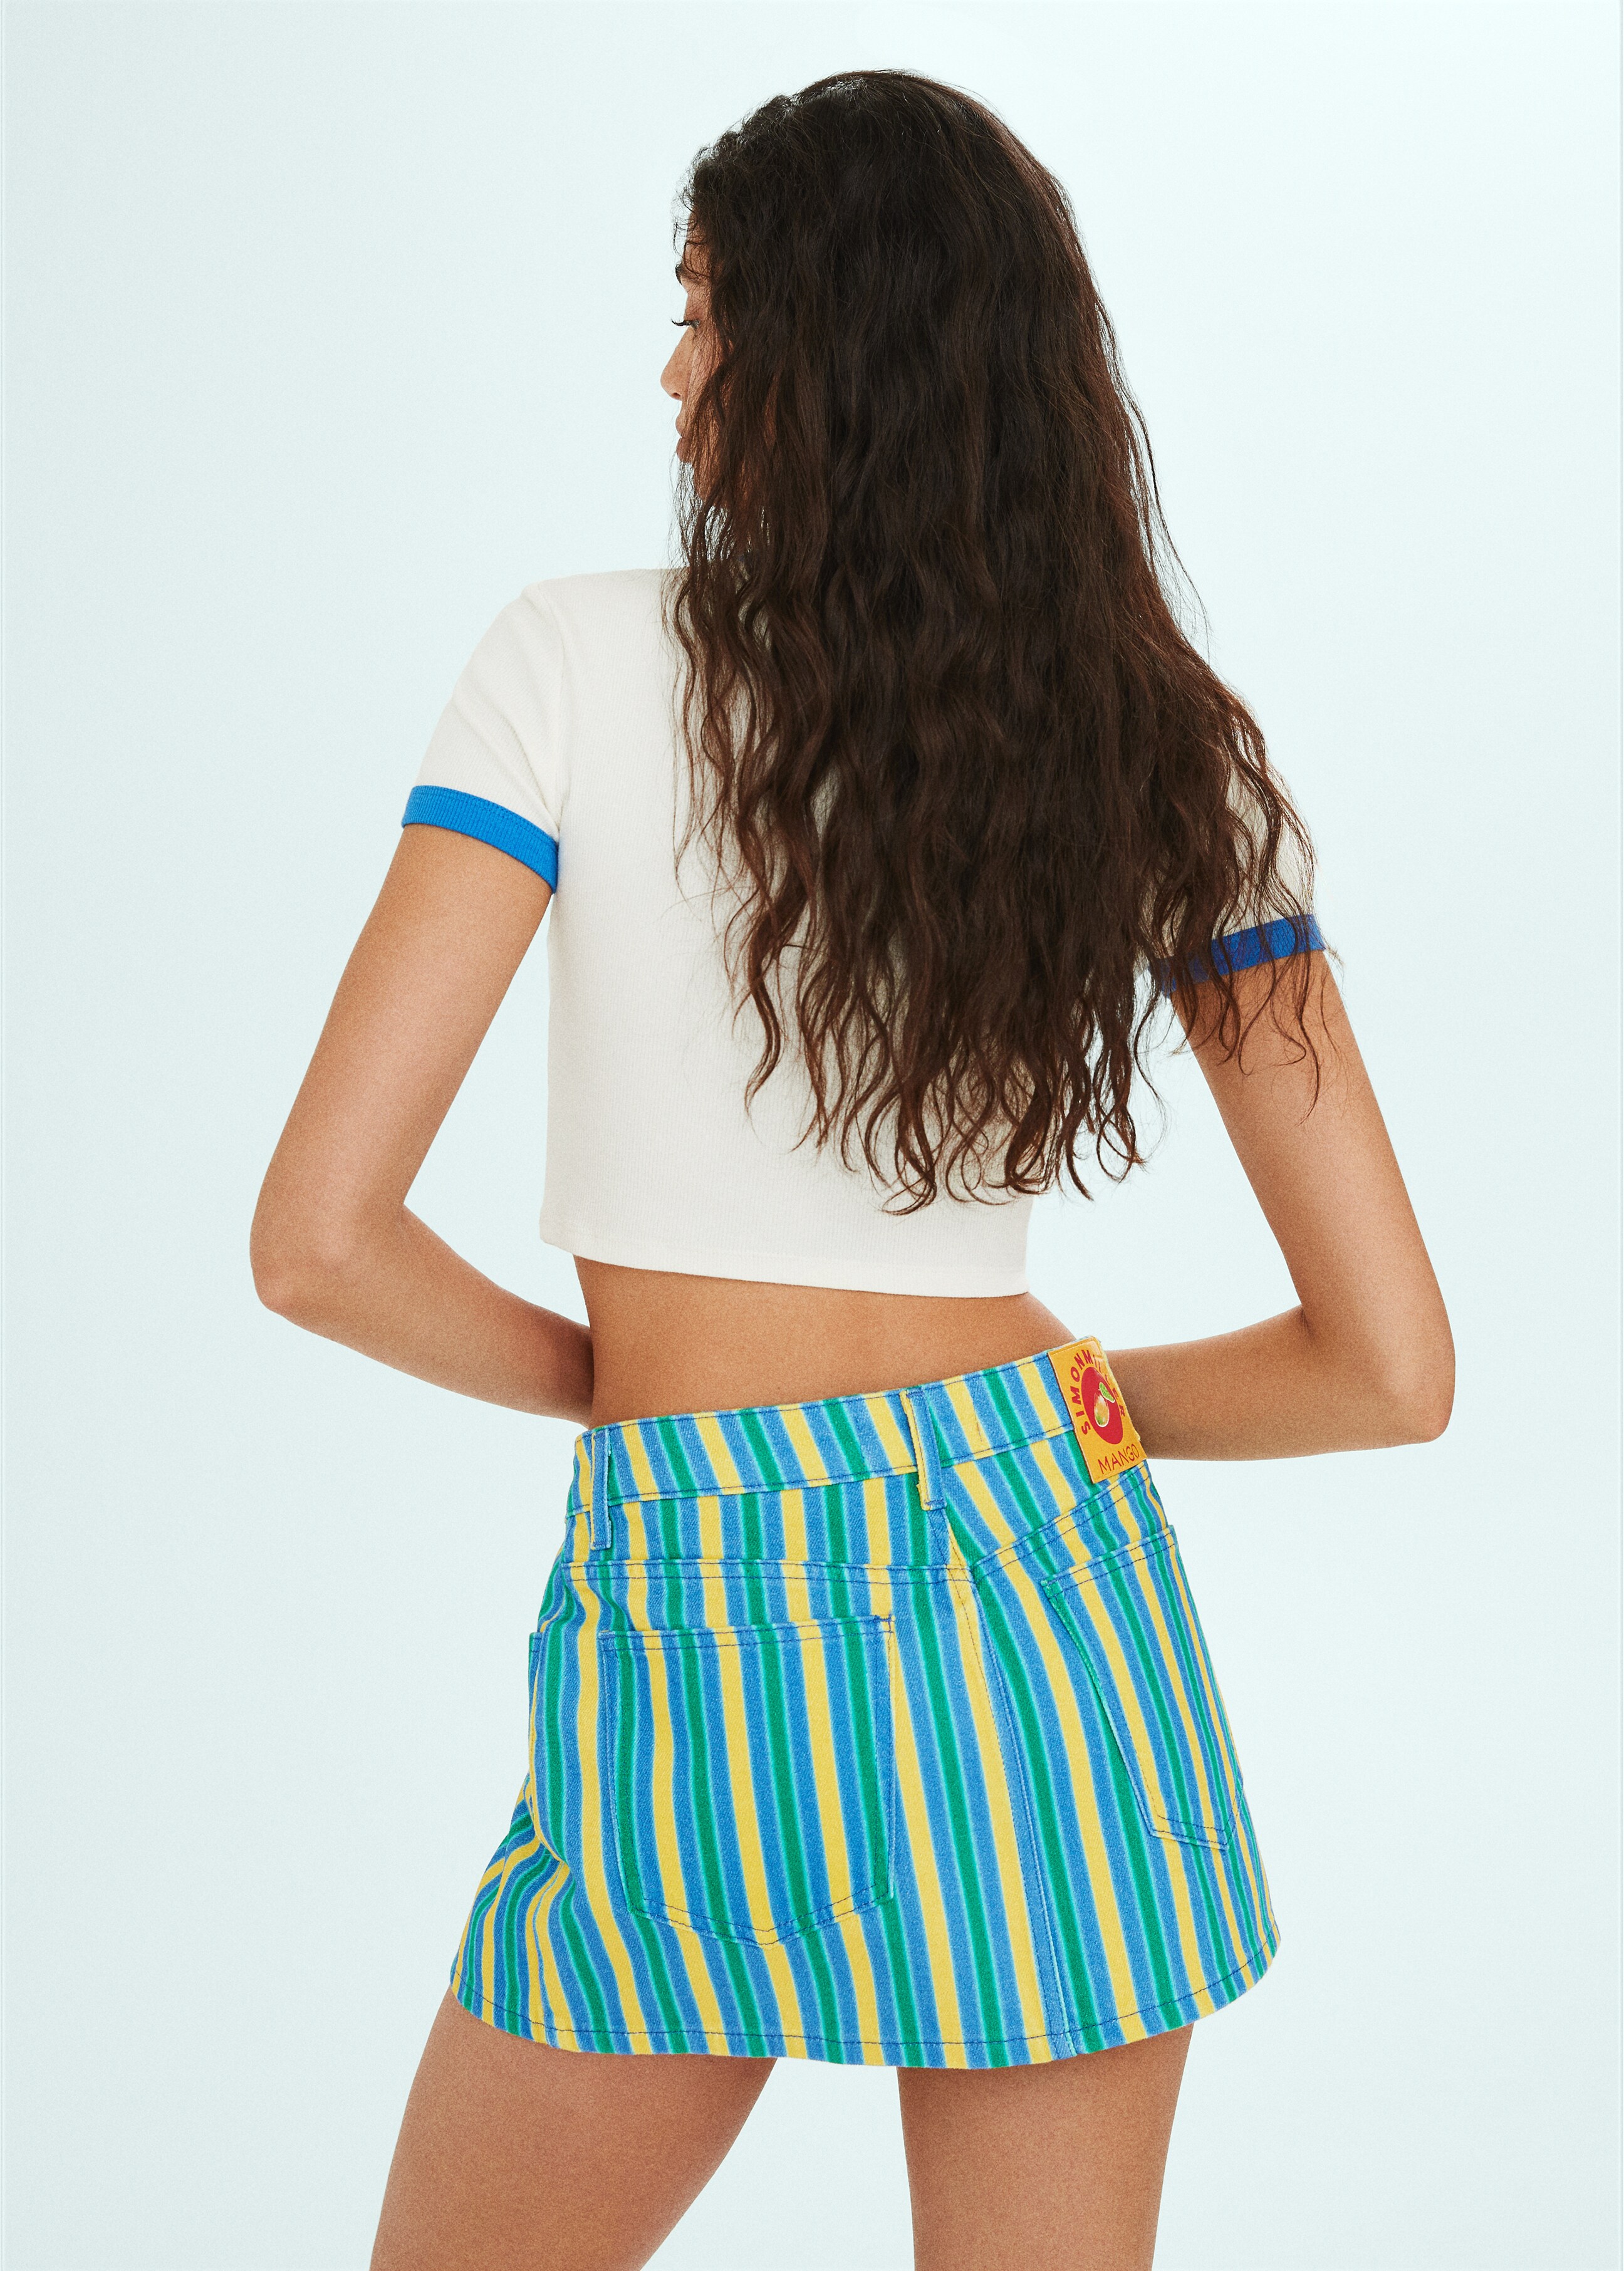 Multi-colored striped denim mini-skirt - Reverse of the article